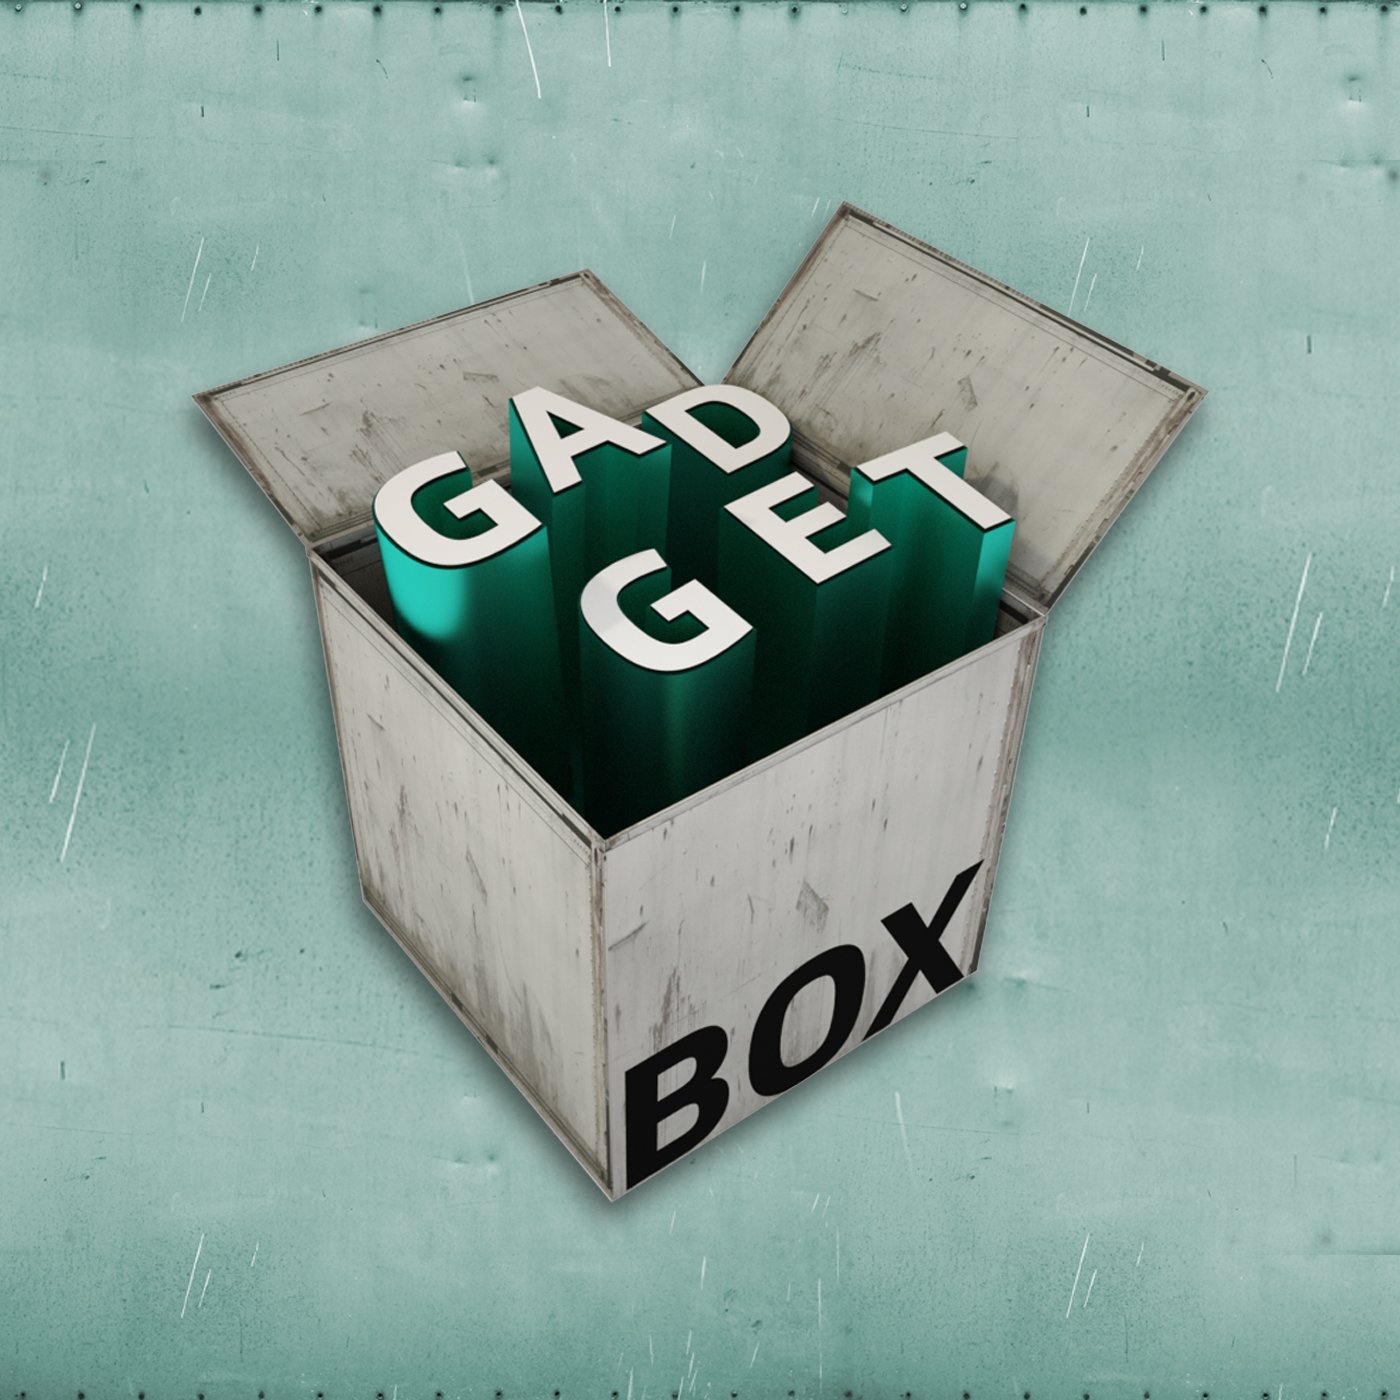 Gadget Box